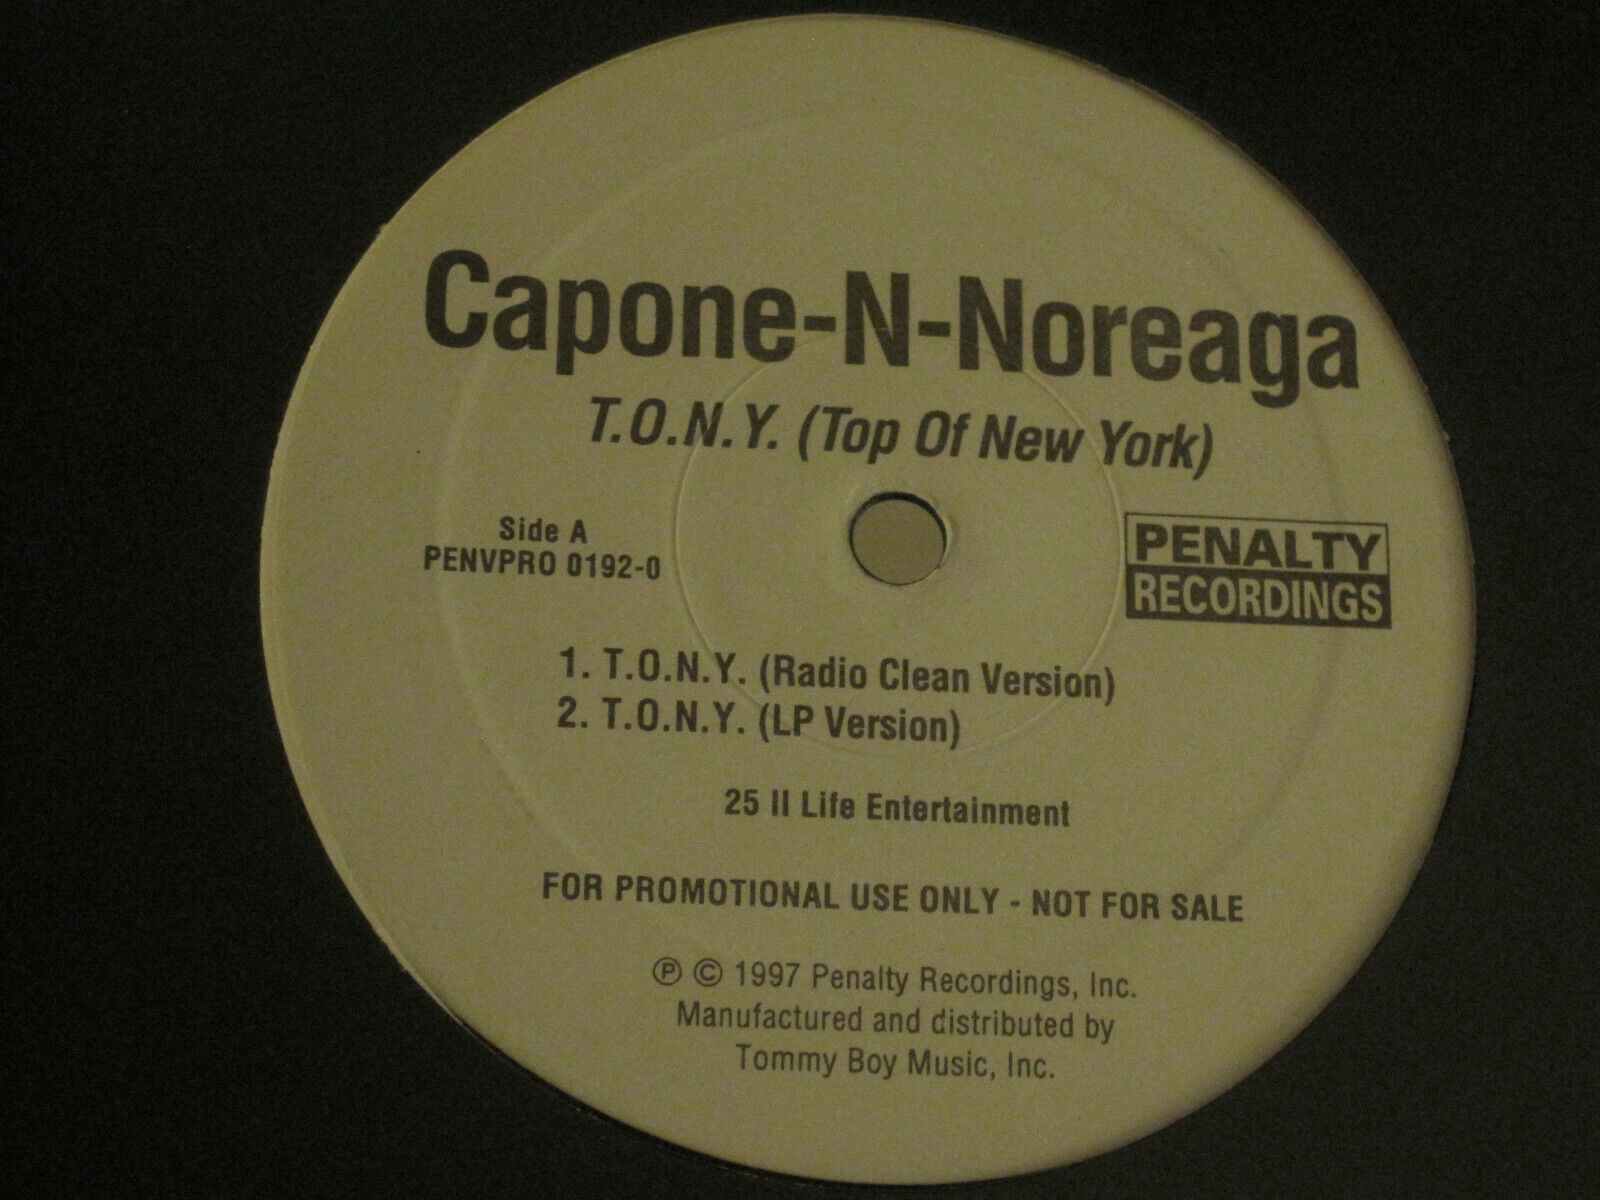 CAPONE-N-NOREAGA T.O.N.Y. TOP OF NEW YORK 12" ORIG '97 PENALTY PROMO TRAGEDY VG+